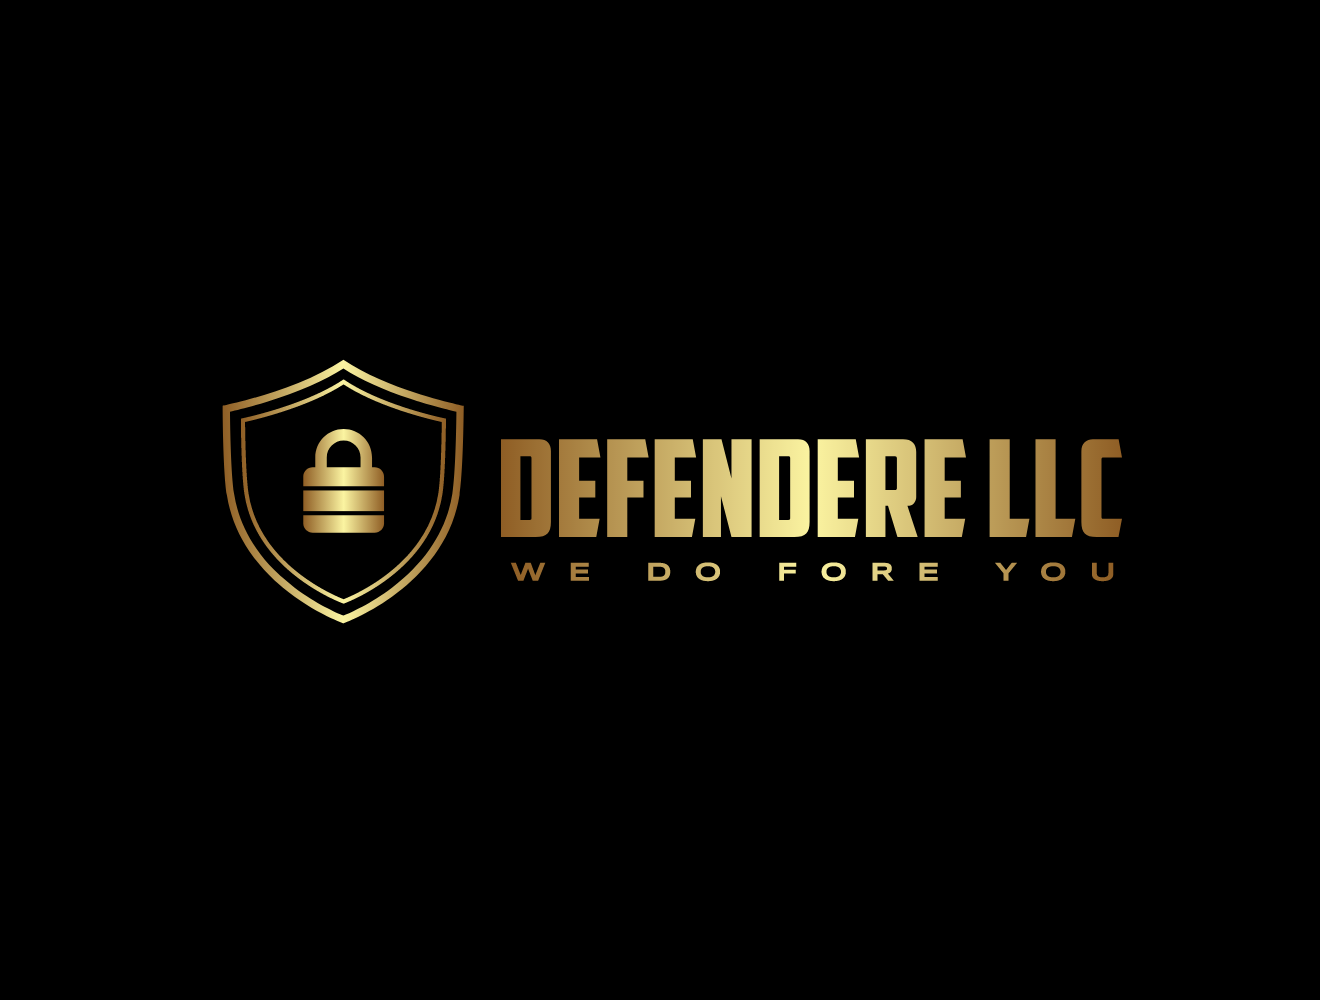 Defendere LLC